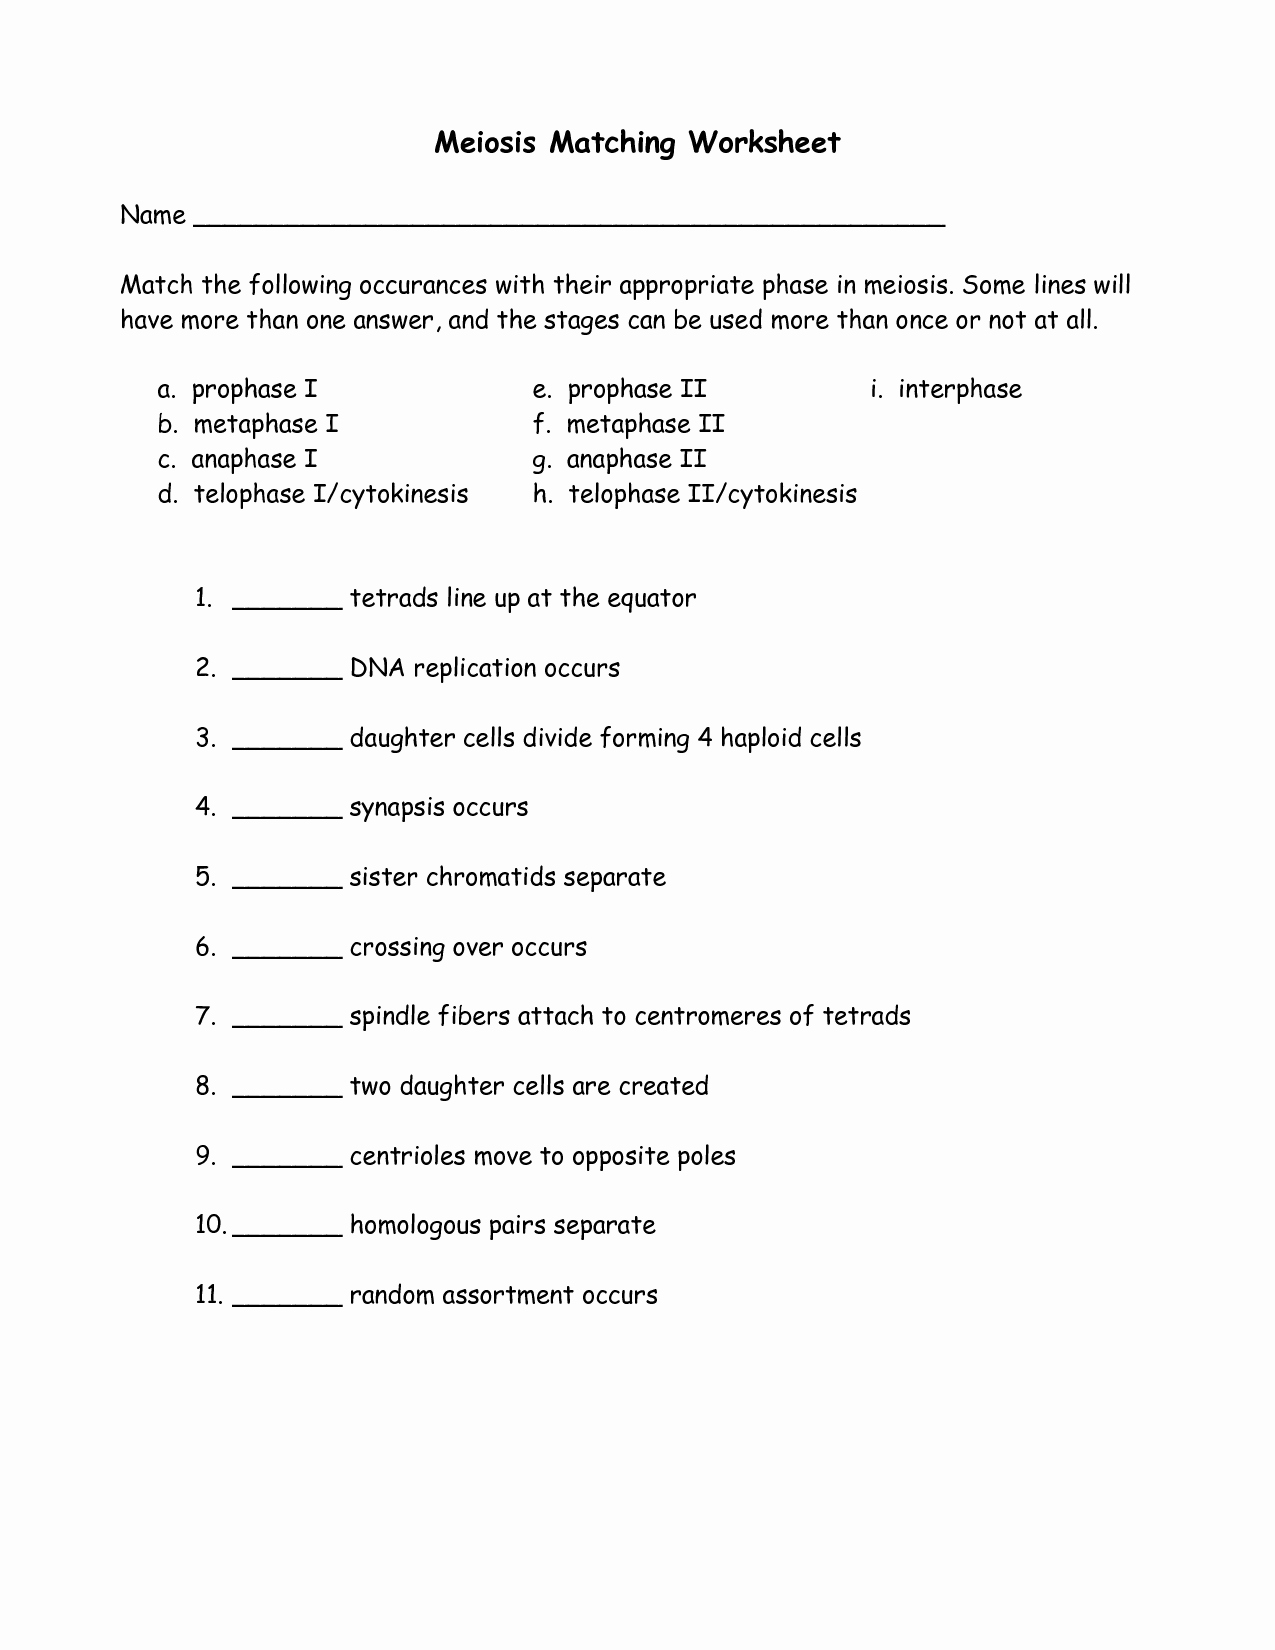 Meiosis Matching Worksheet Answer Key Inspirational 16 Best Of Steps Meiosis Worksheet Answers